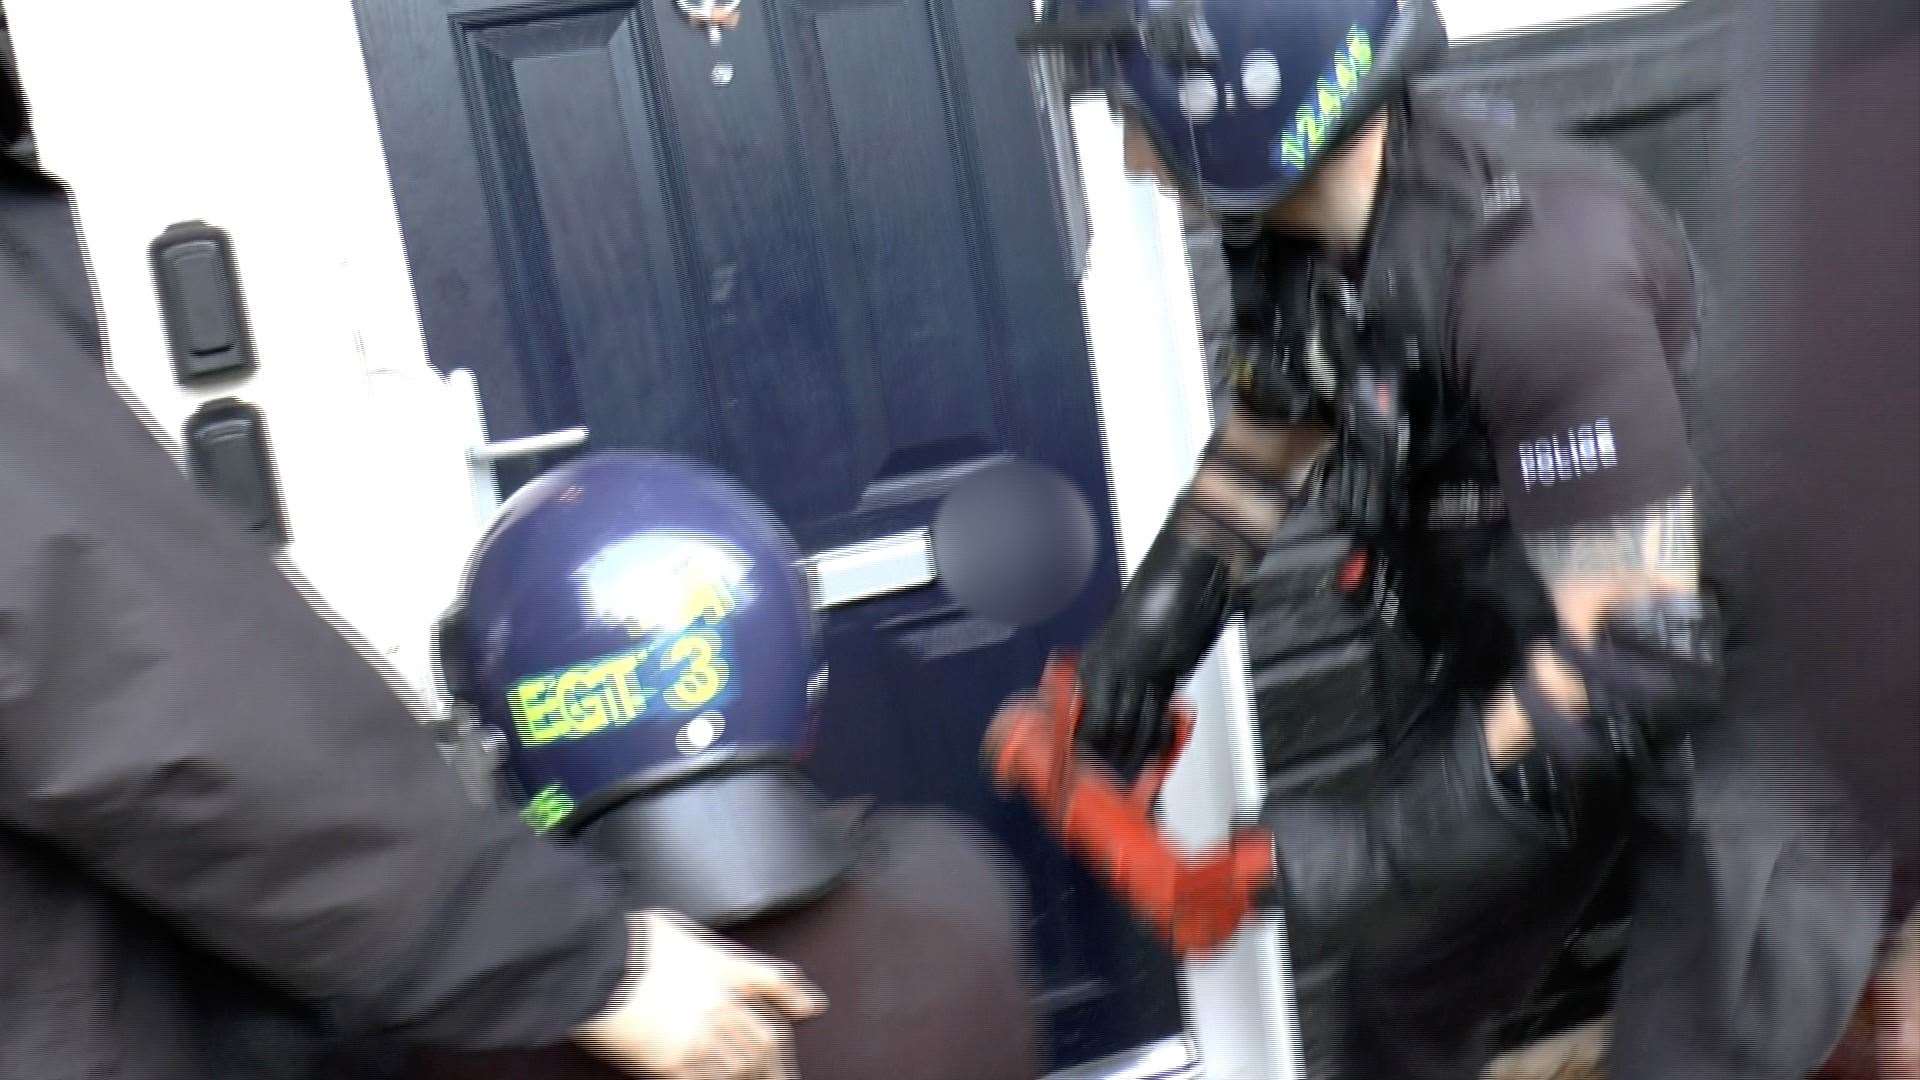 Police raid a house in Maidstone